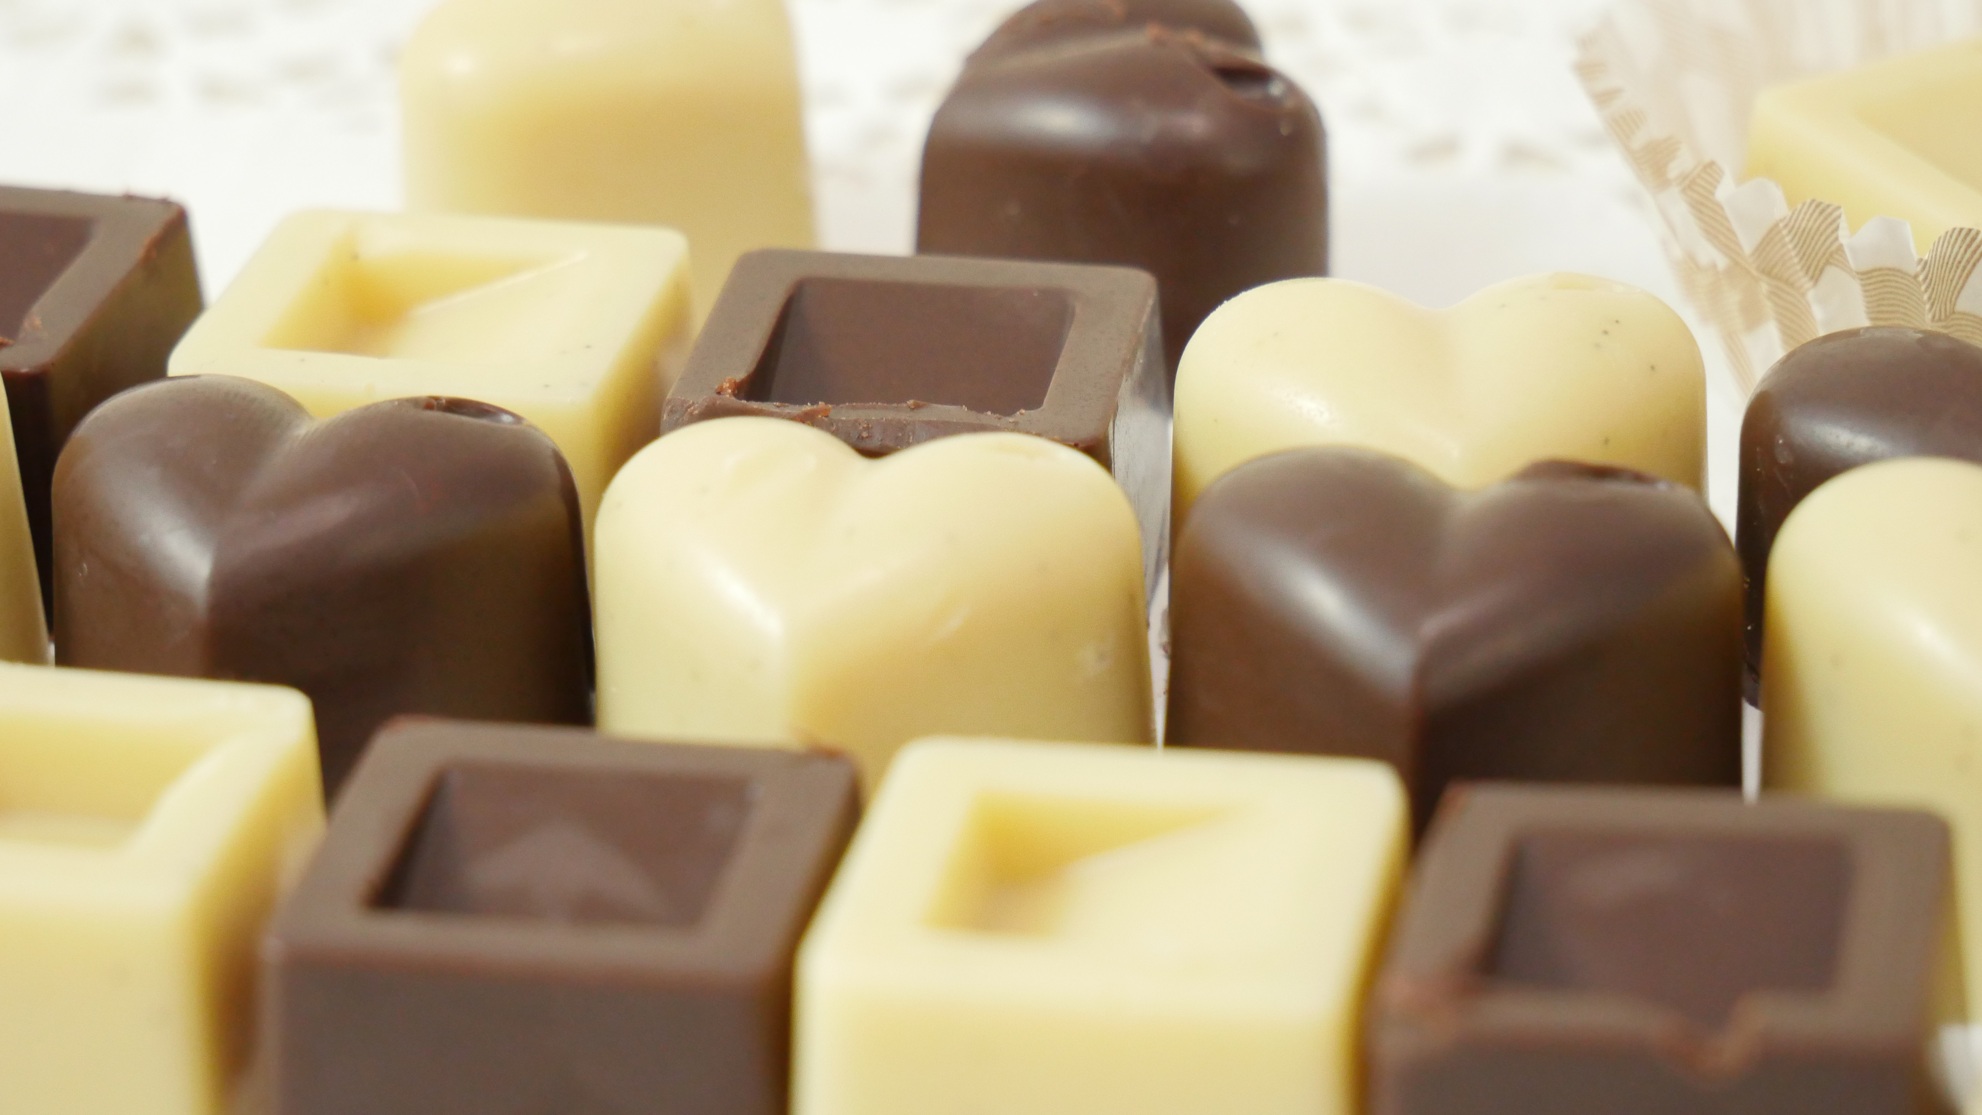 Rezept: DIY Pralinen vegan &amp; zuckerfrei | Schokolade selber machen